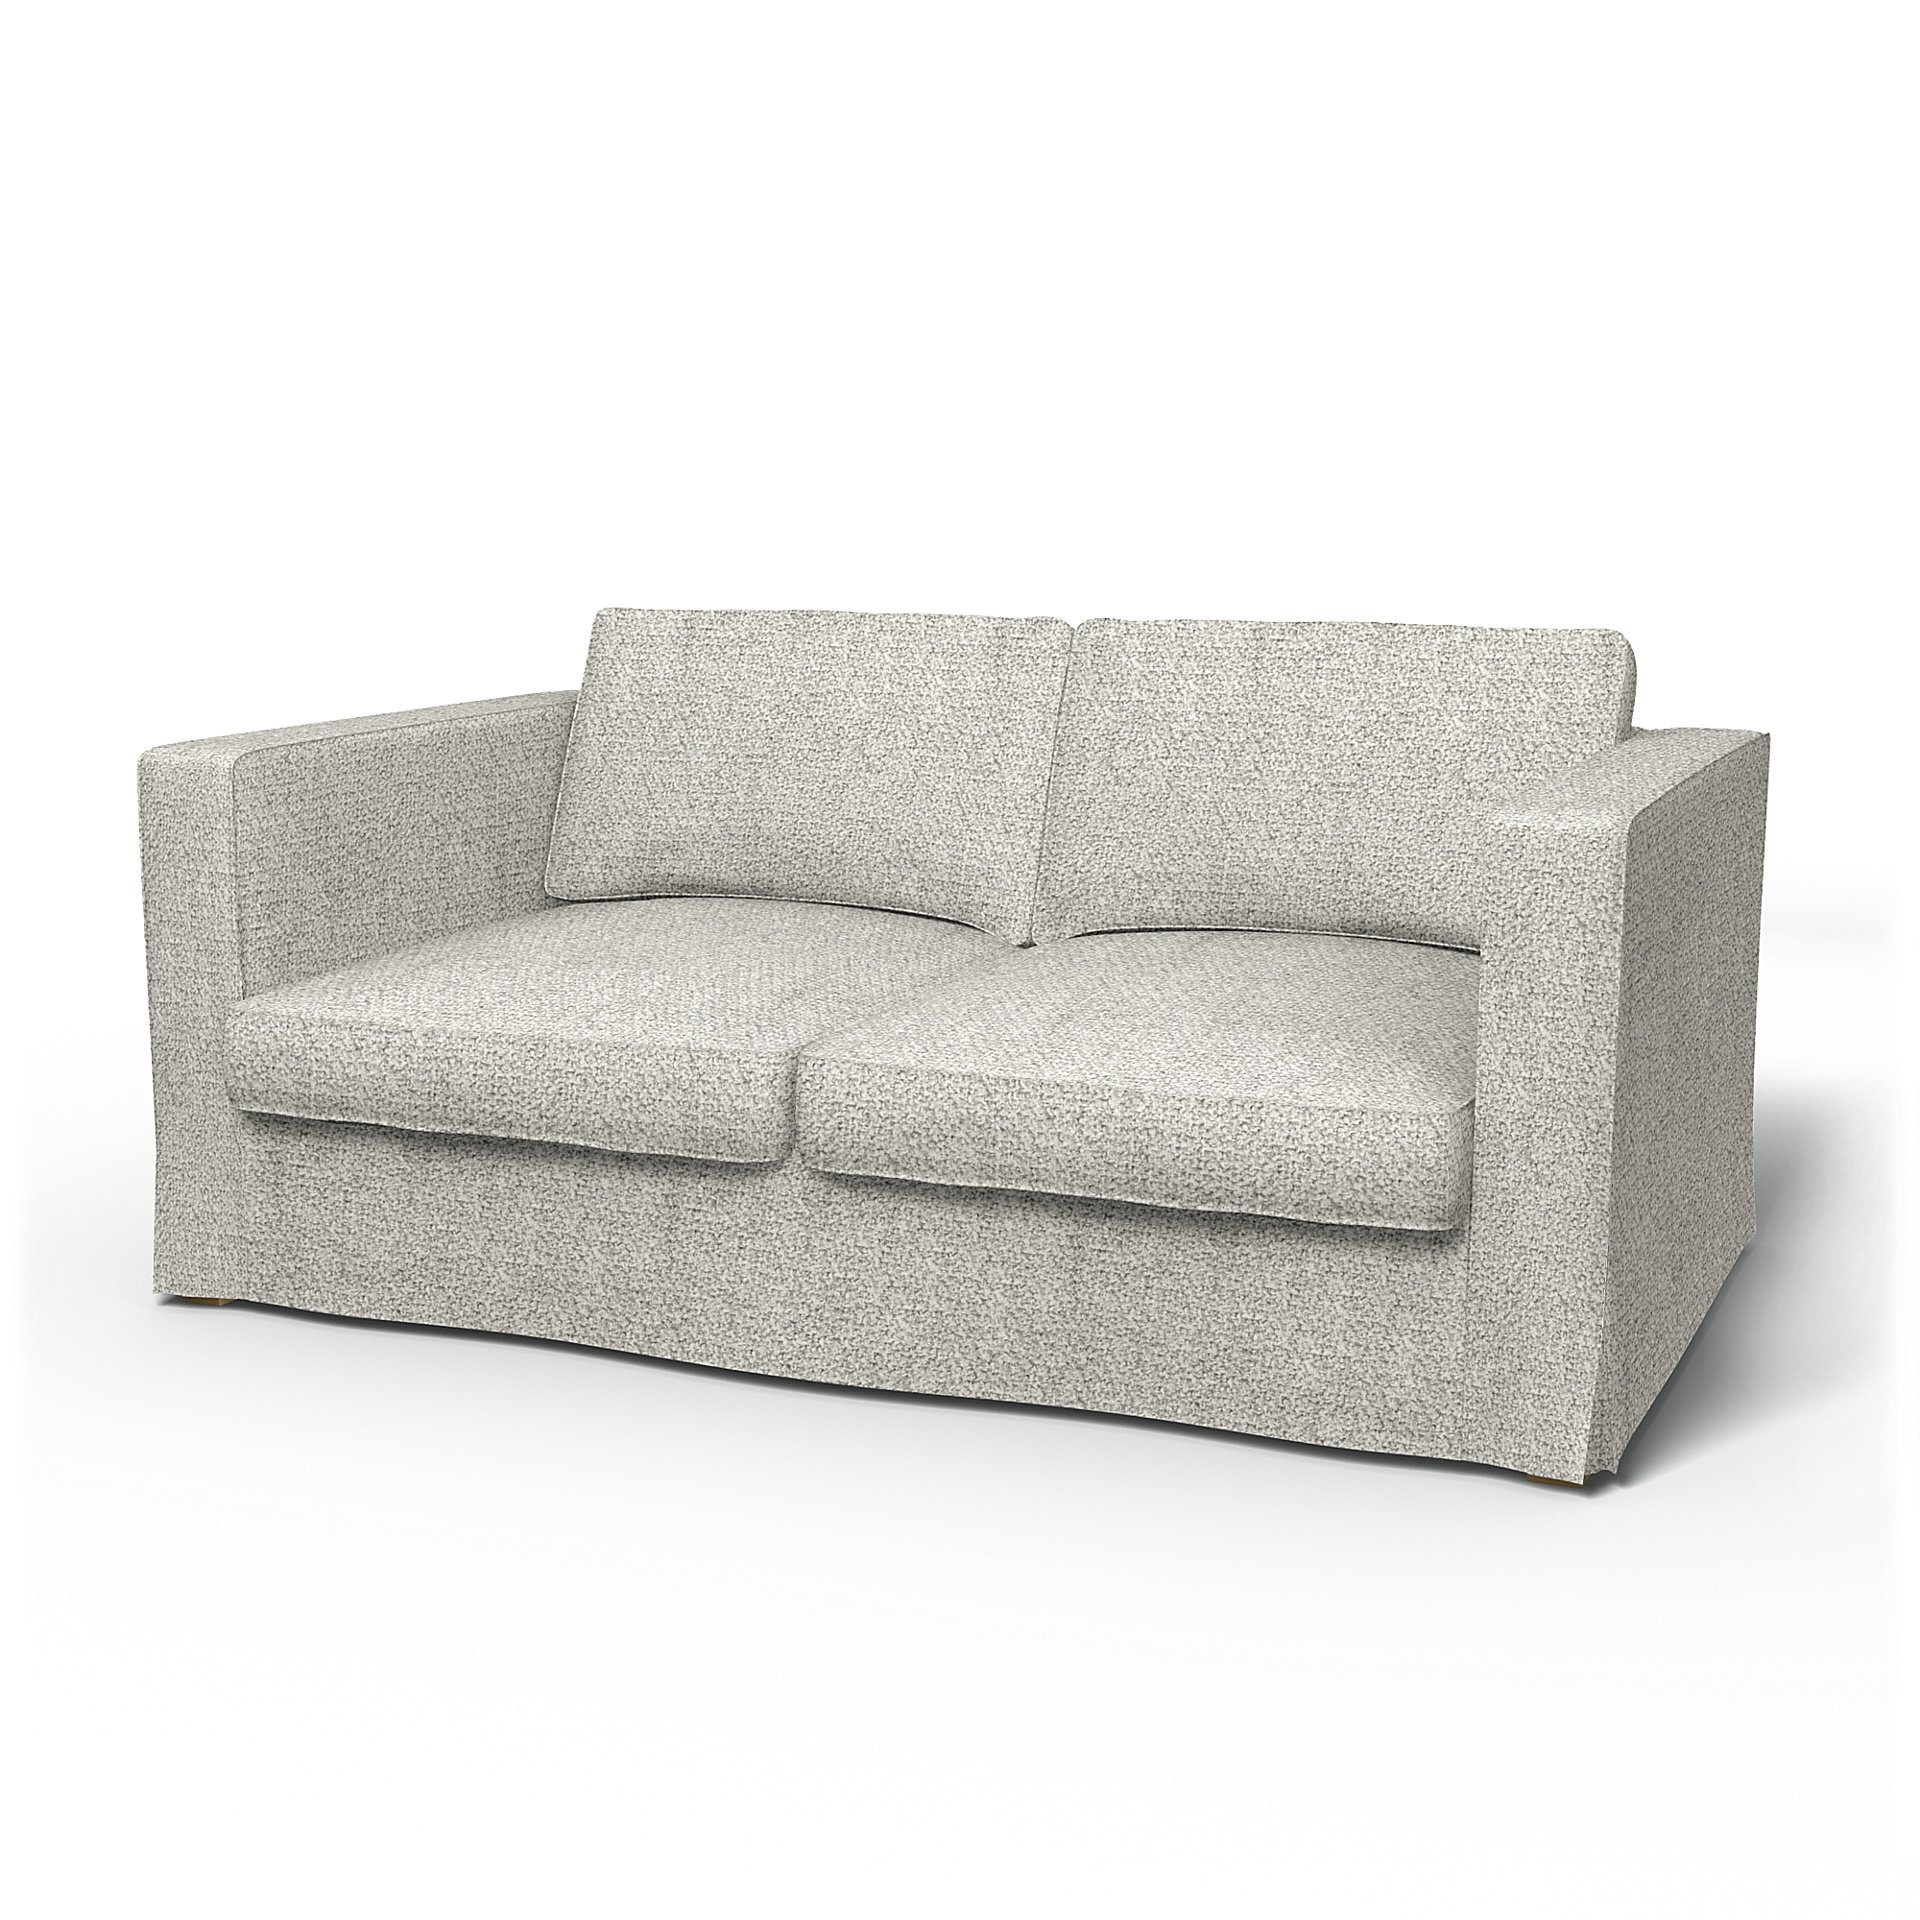 IKEA - Karlstad 2 Seater Sofa Cover, Driftwood, Boucle & Texture - Bemz